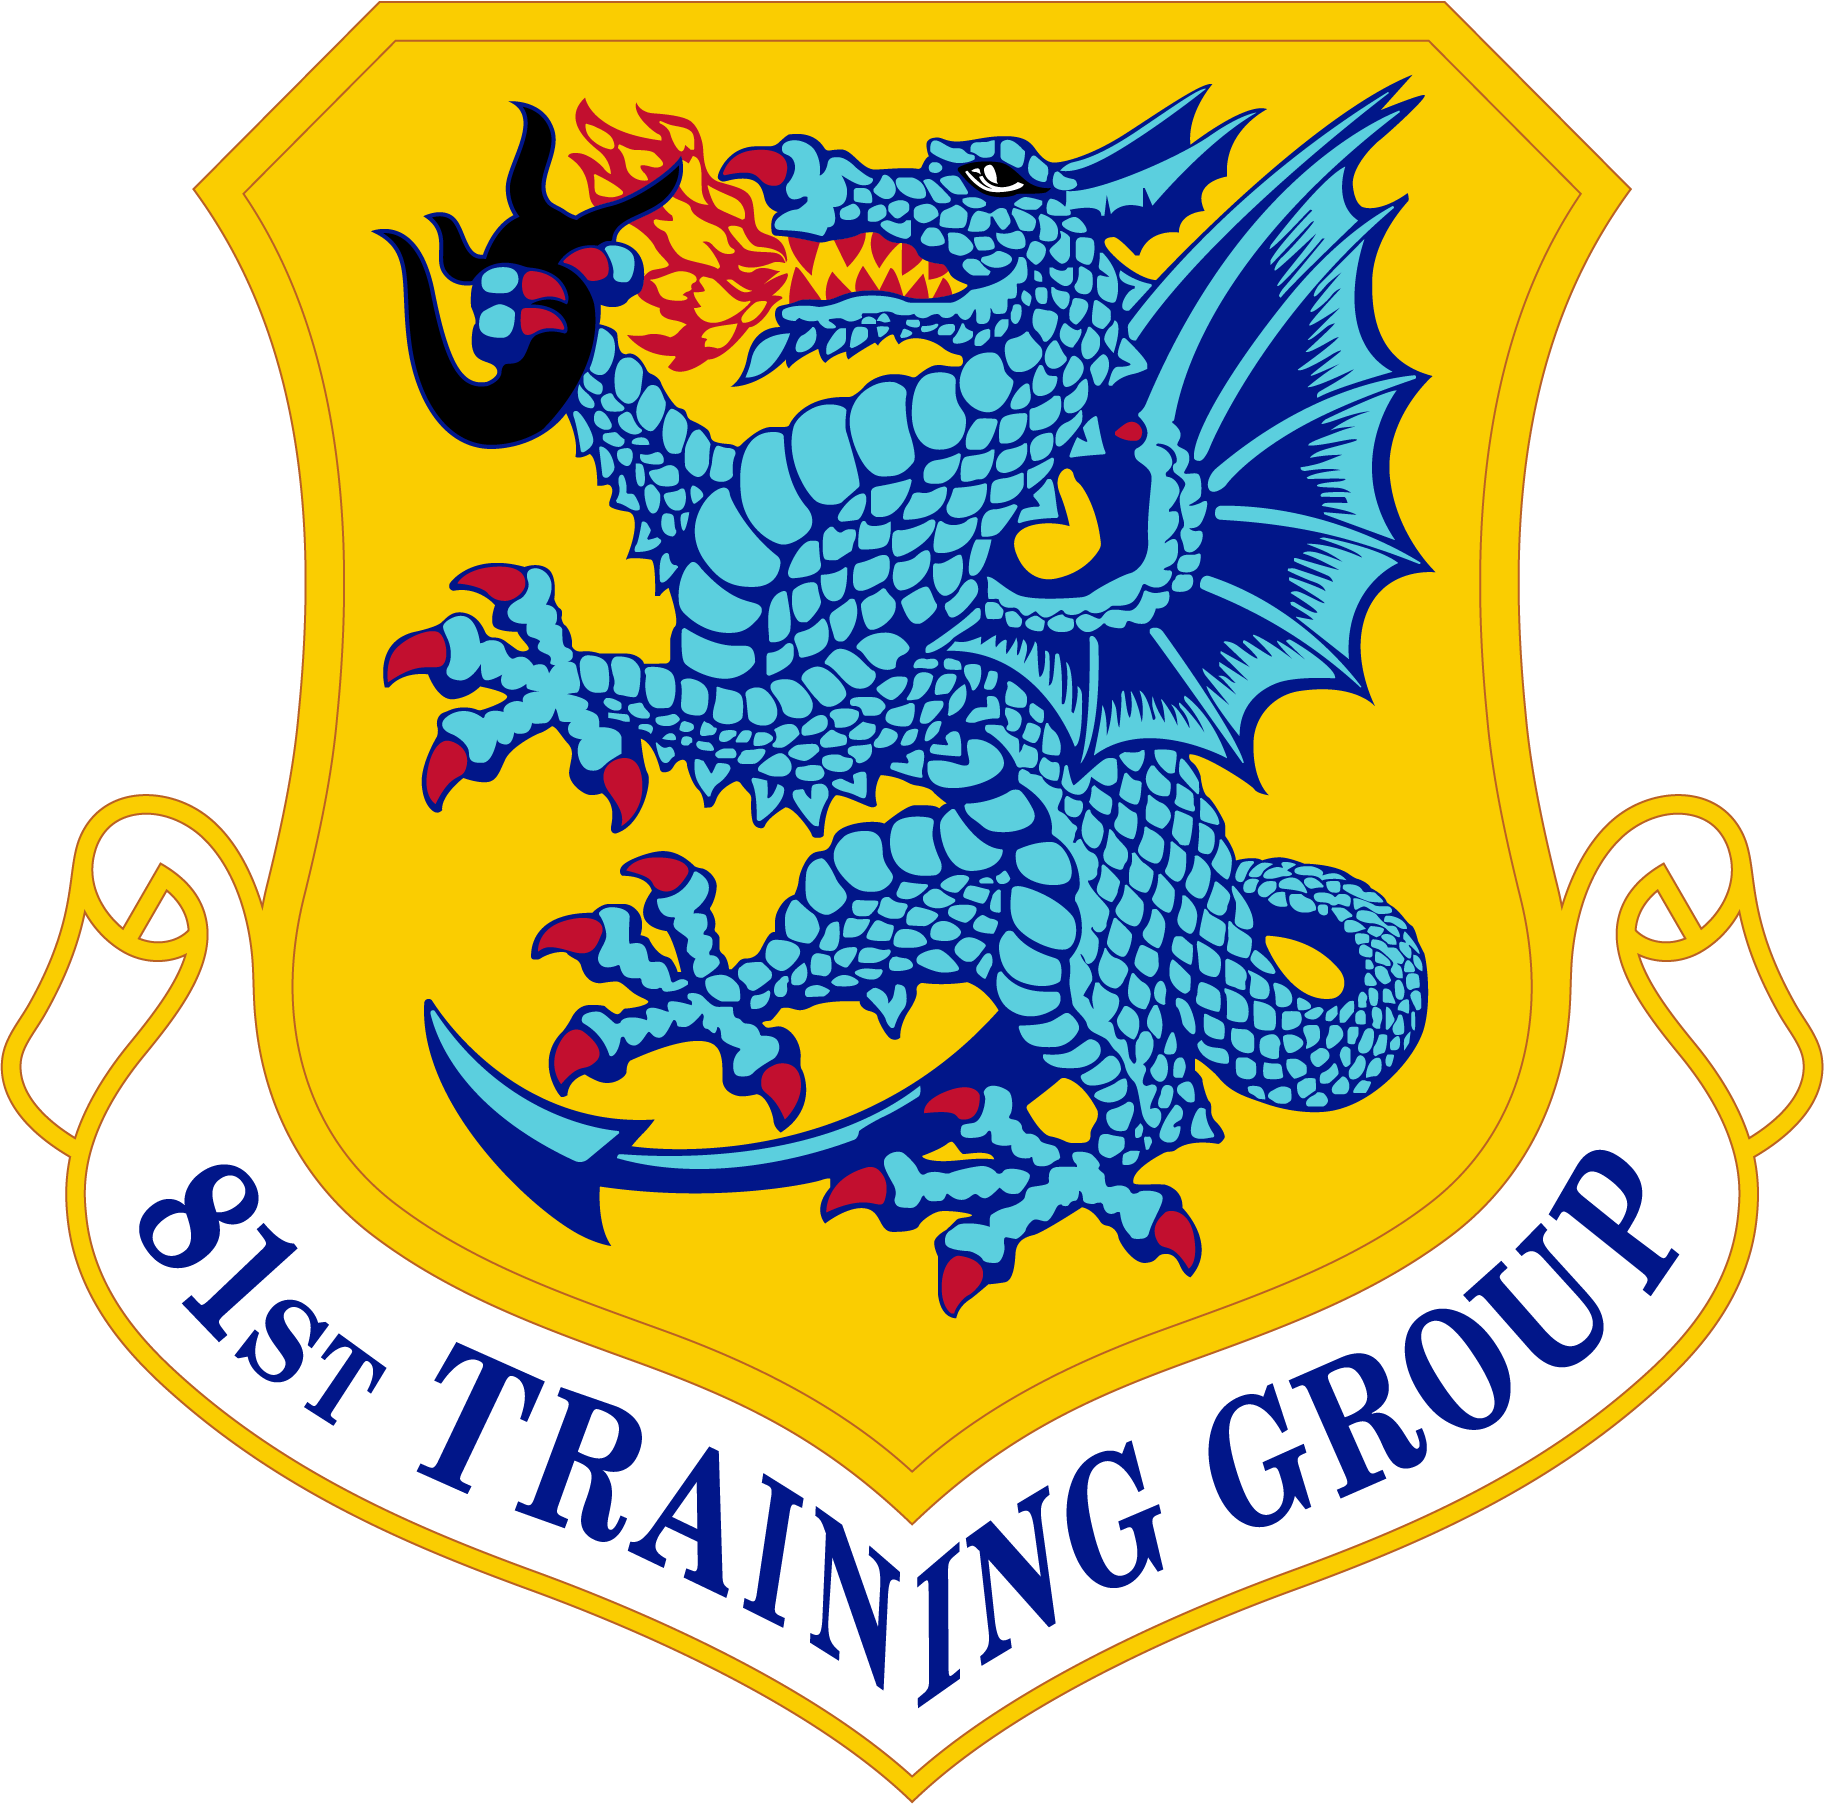 81st Training Group emblem